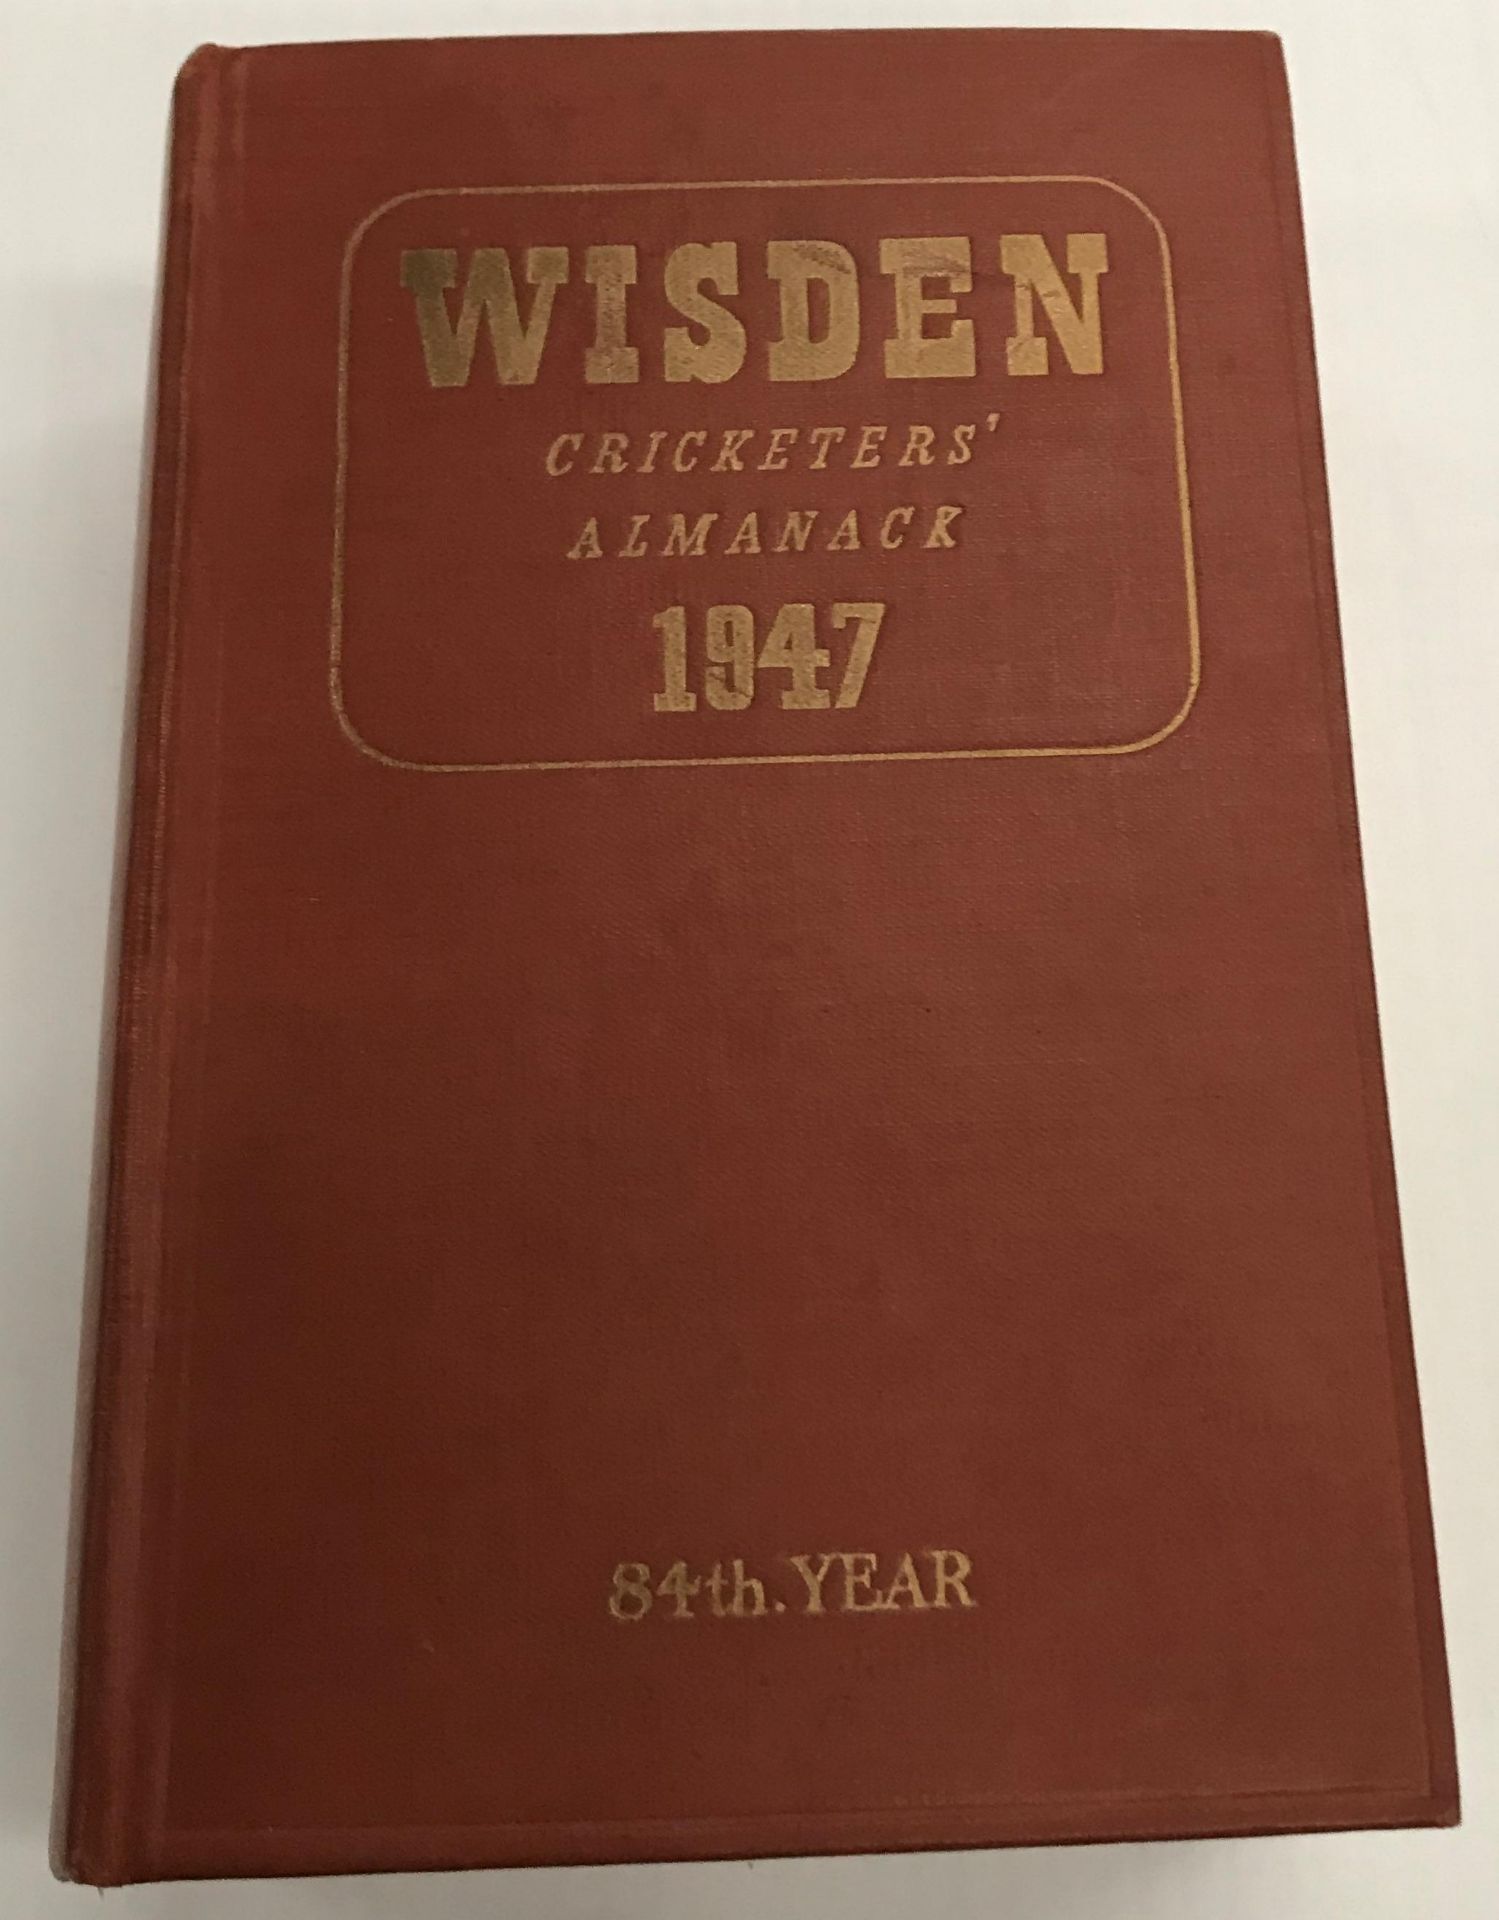 CRICKET INTEREST - A rare copy of Wisden's Cricket Almanack 1947 in excellent condition